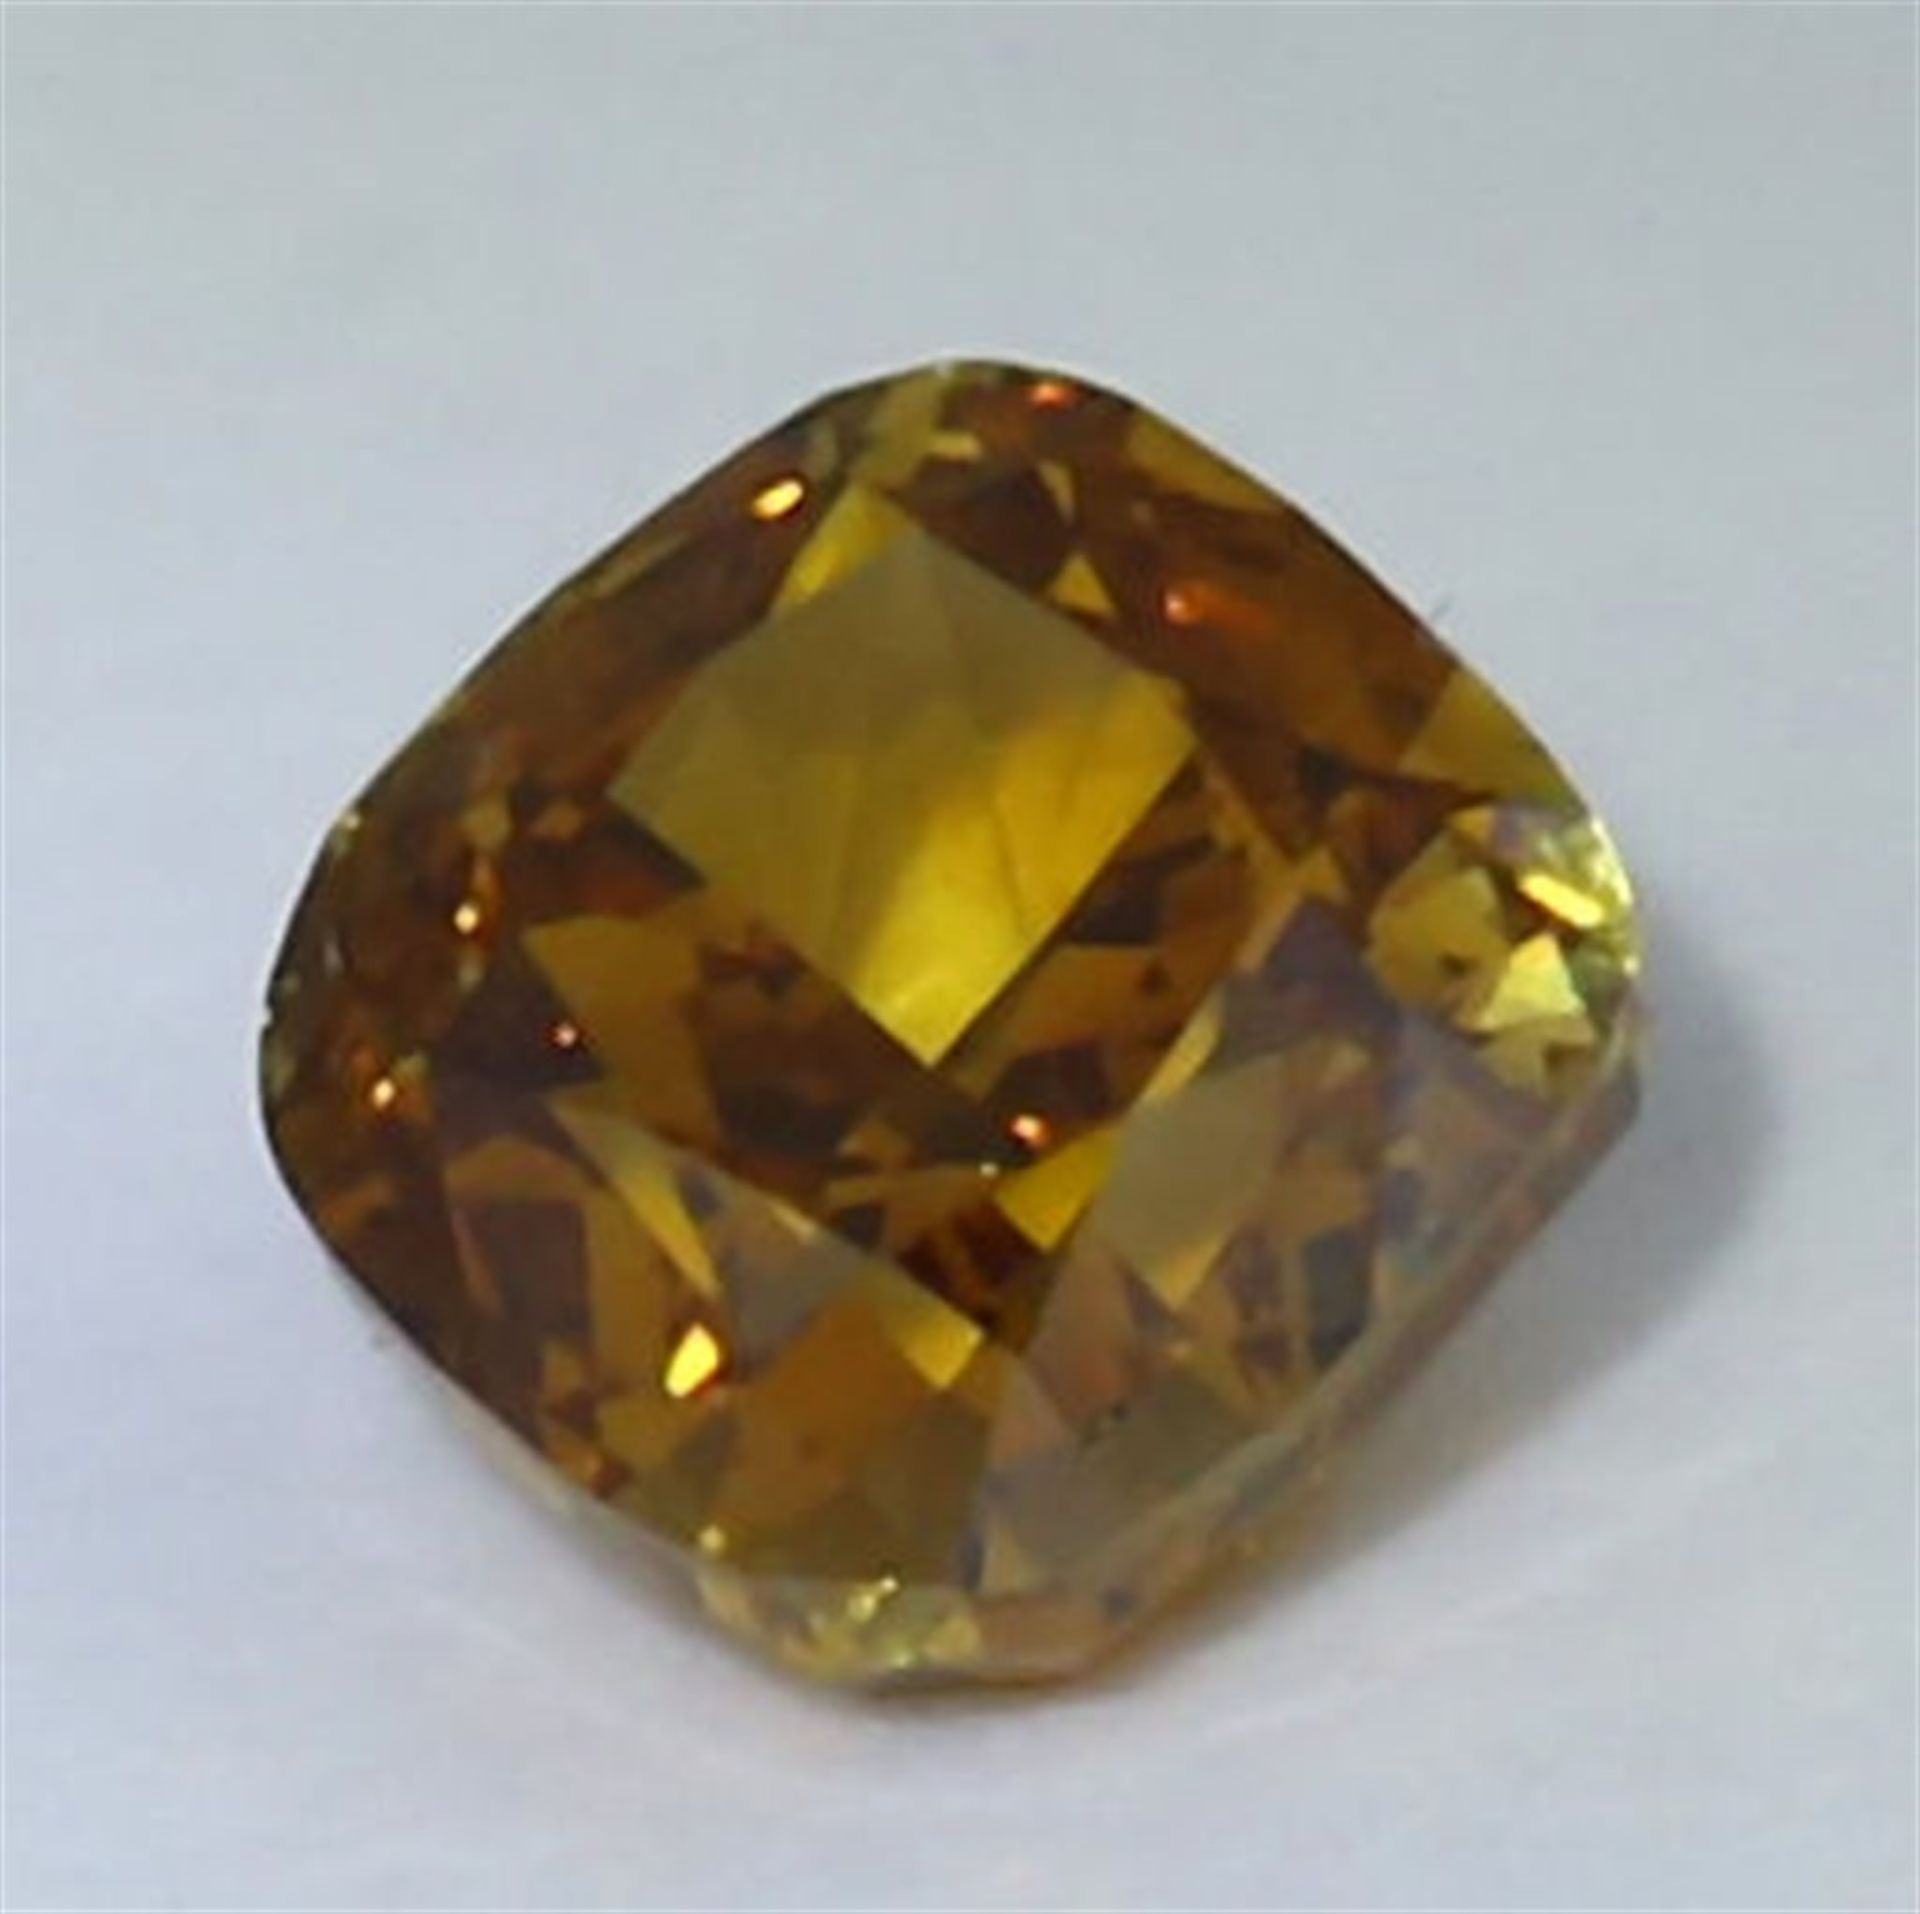 IGI Certified 0.66 ct. Diamond - Fancy Brownish Yellow - VS 2 UNTREATED - Image 3 of 6